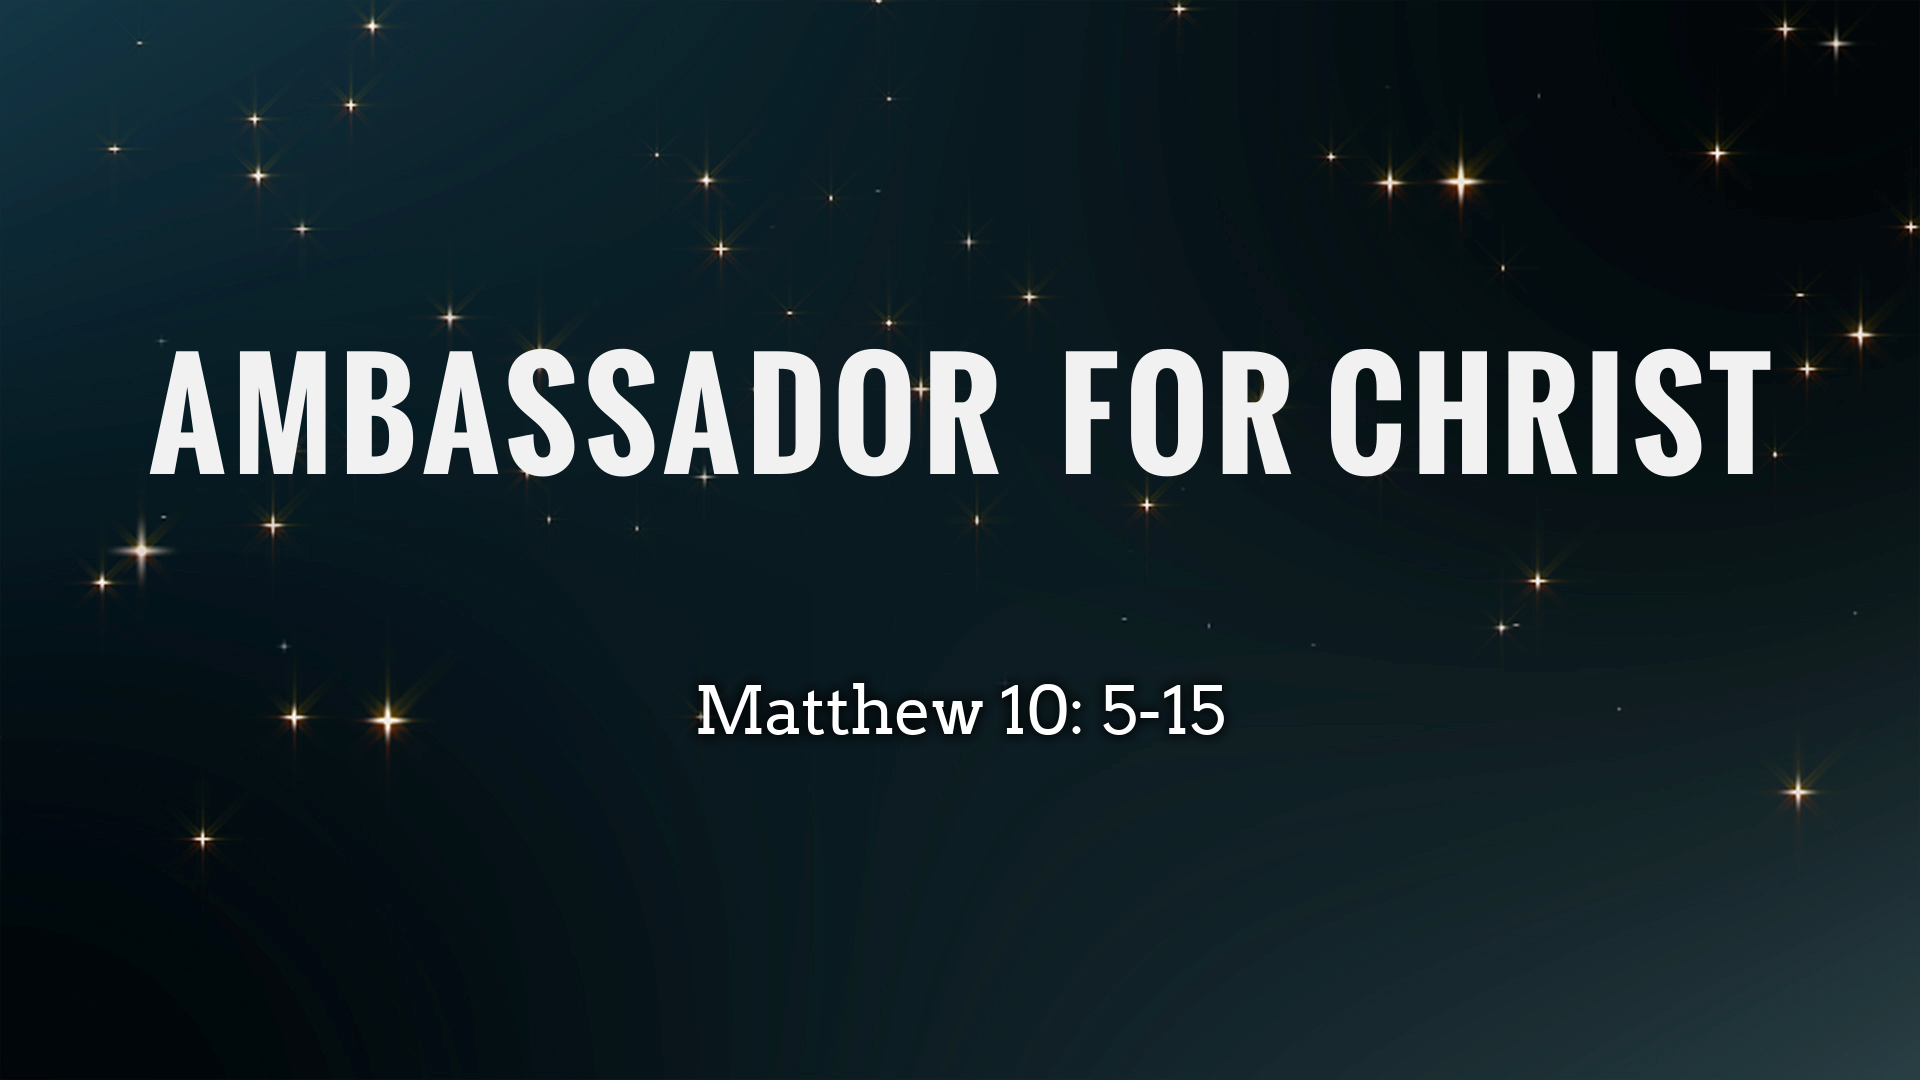 May 22, 2022 - Ambassador for Christ Matthew 10: 5-15